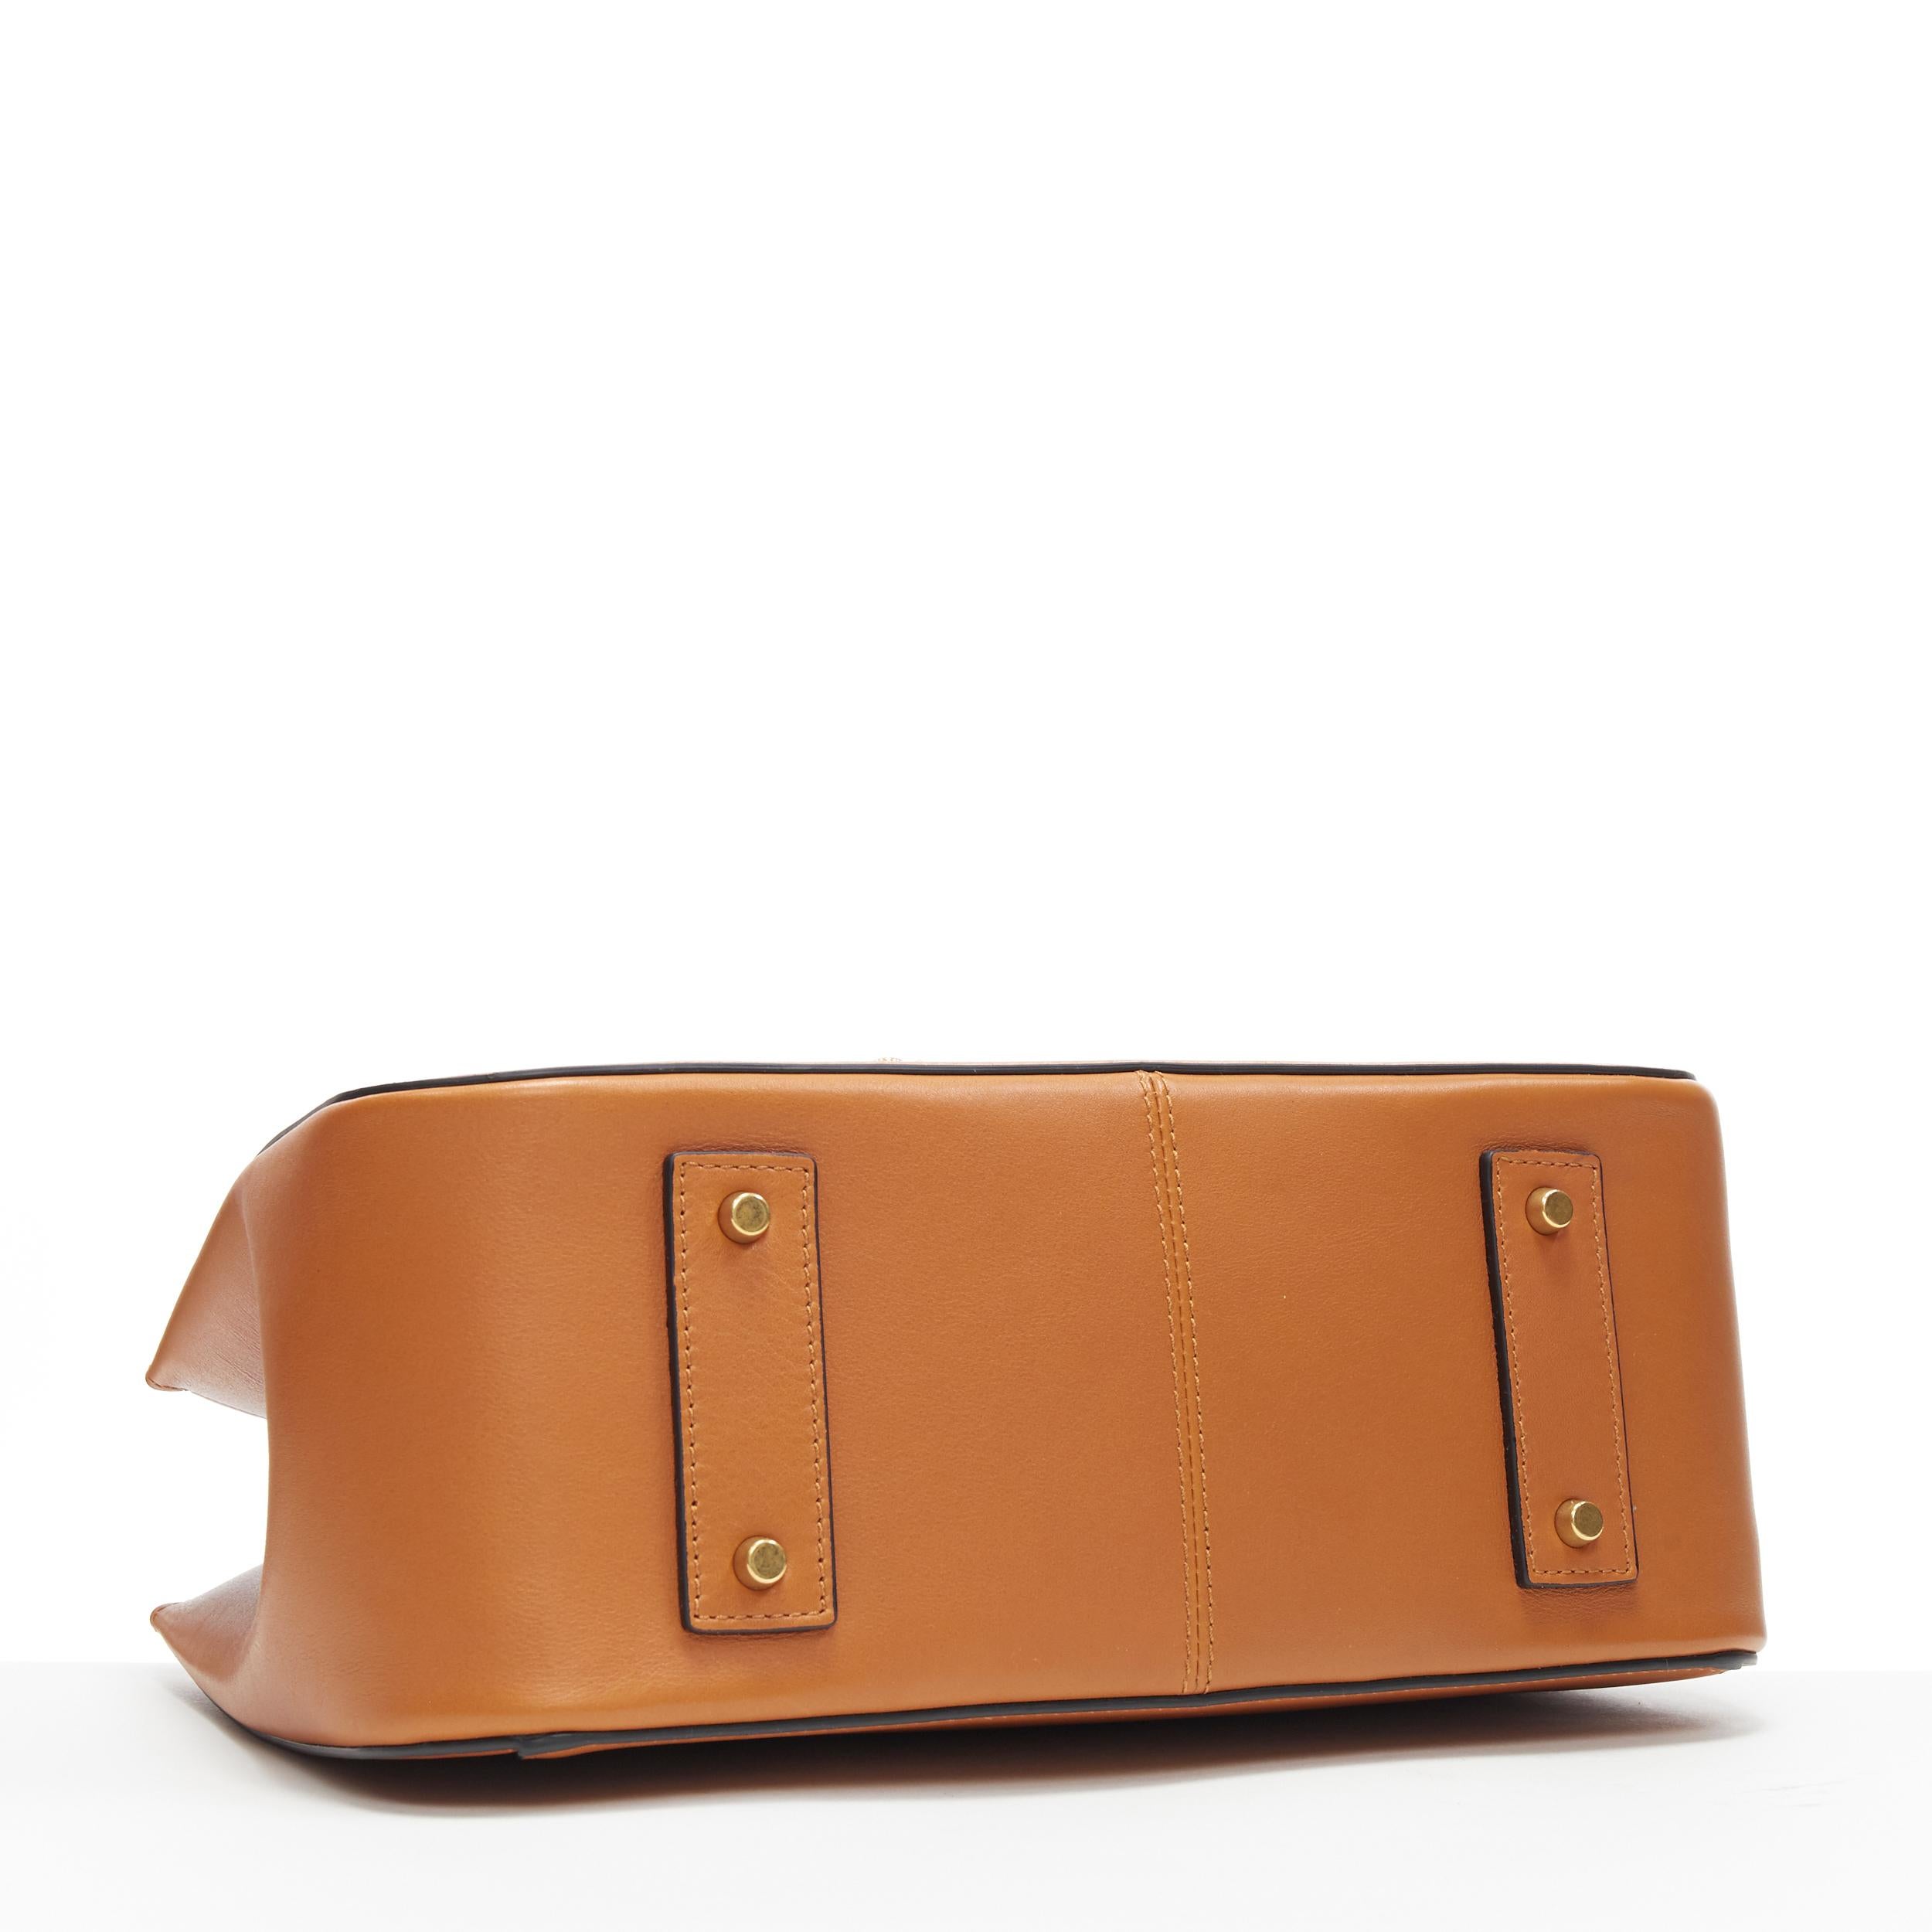 Orange VERSACE Virtus cognac brown leather gold buckle flap top handle satchel bag